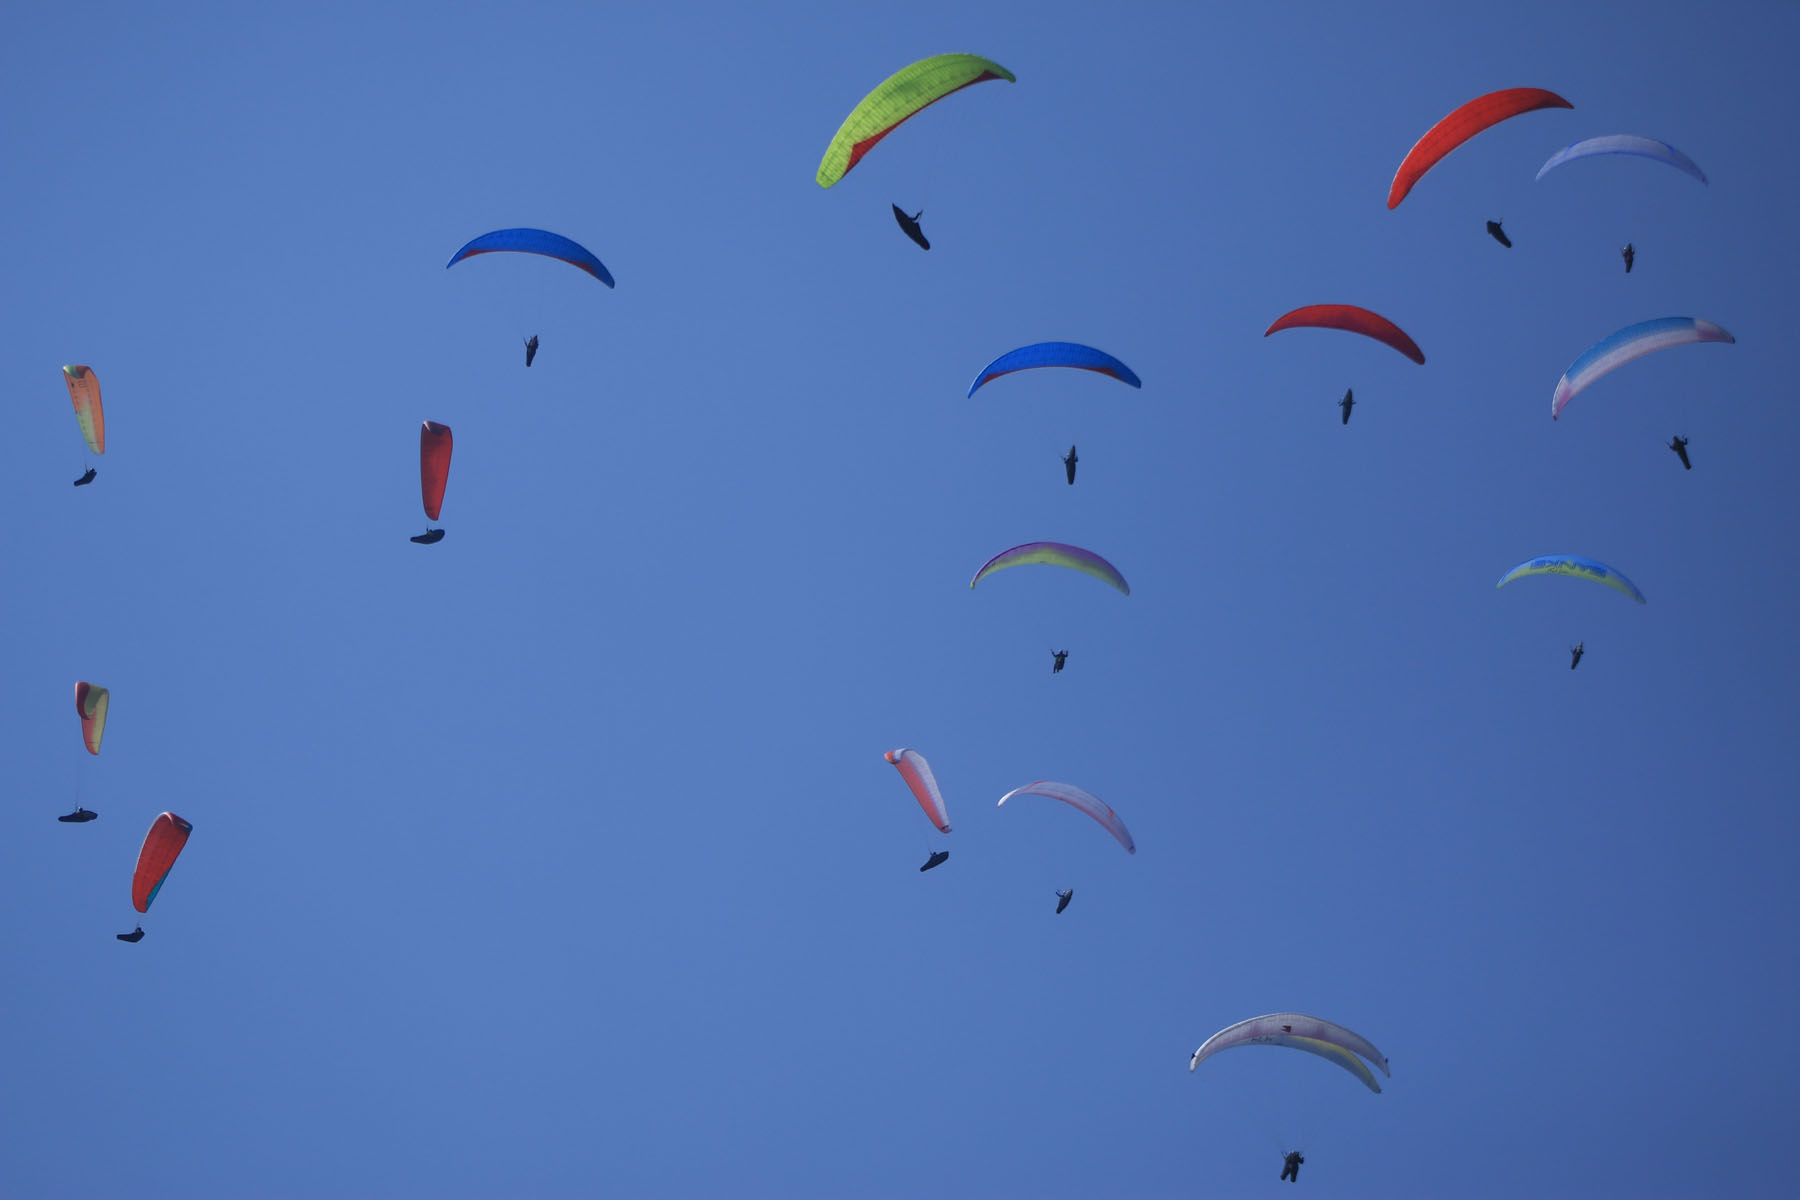 nepal-open-paragliding-championship-kicks-off-in-pokhara